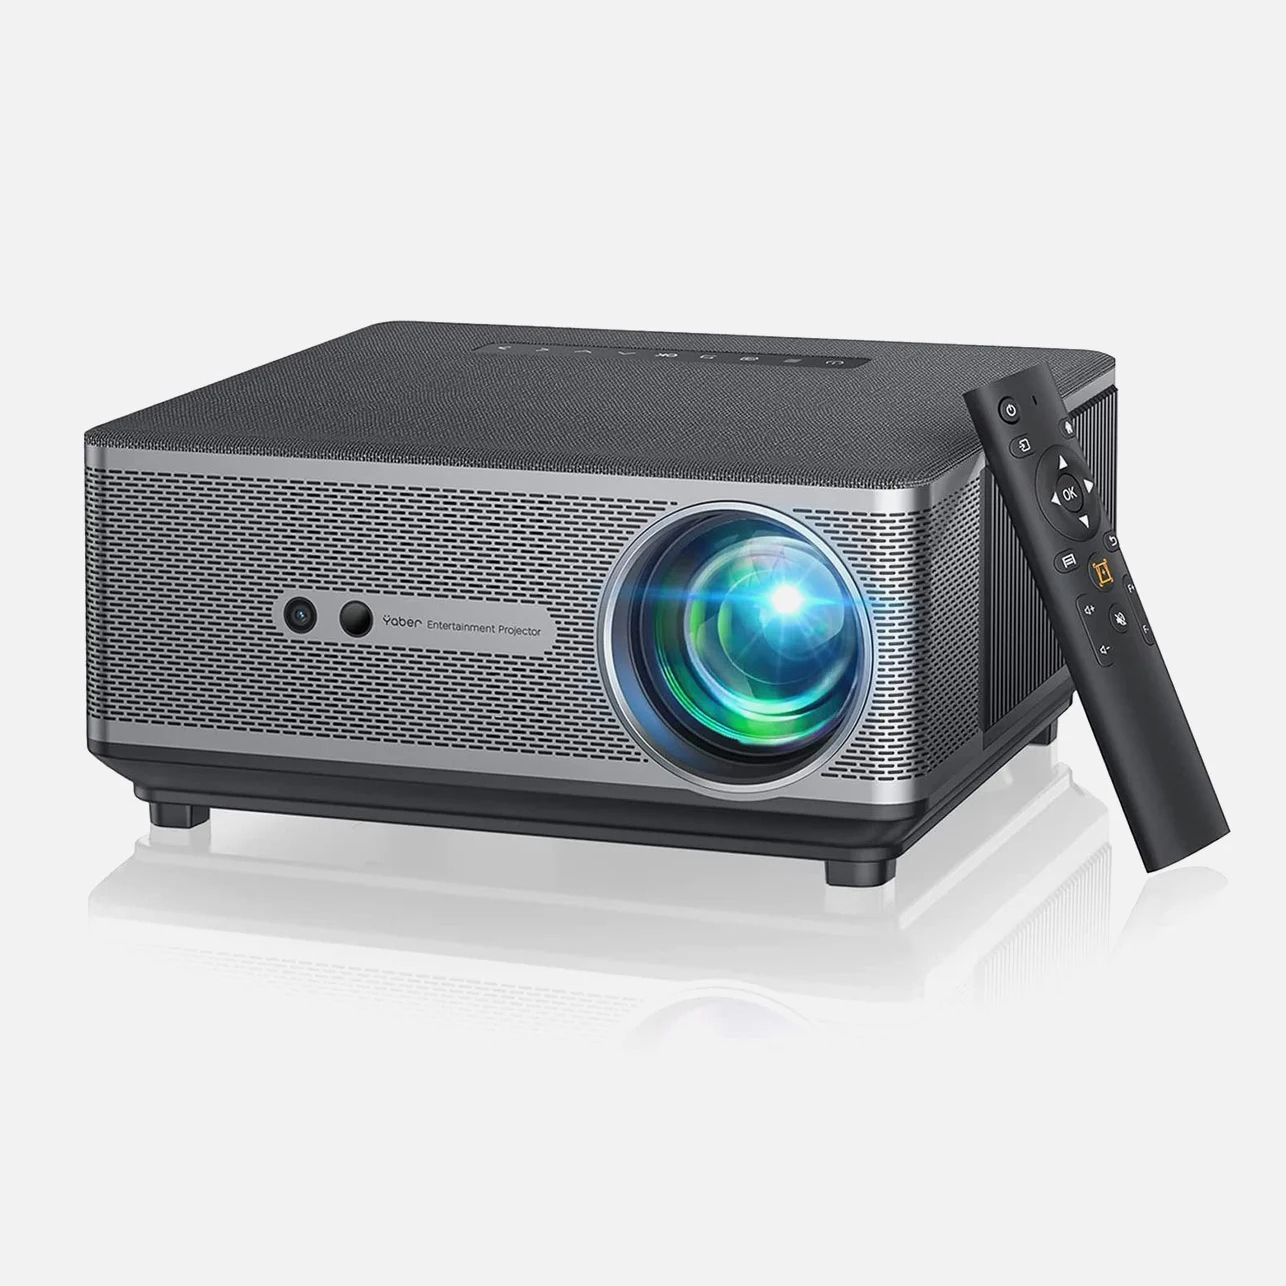 Yaber ACE K1 Full HD Smart Projector